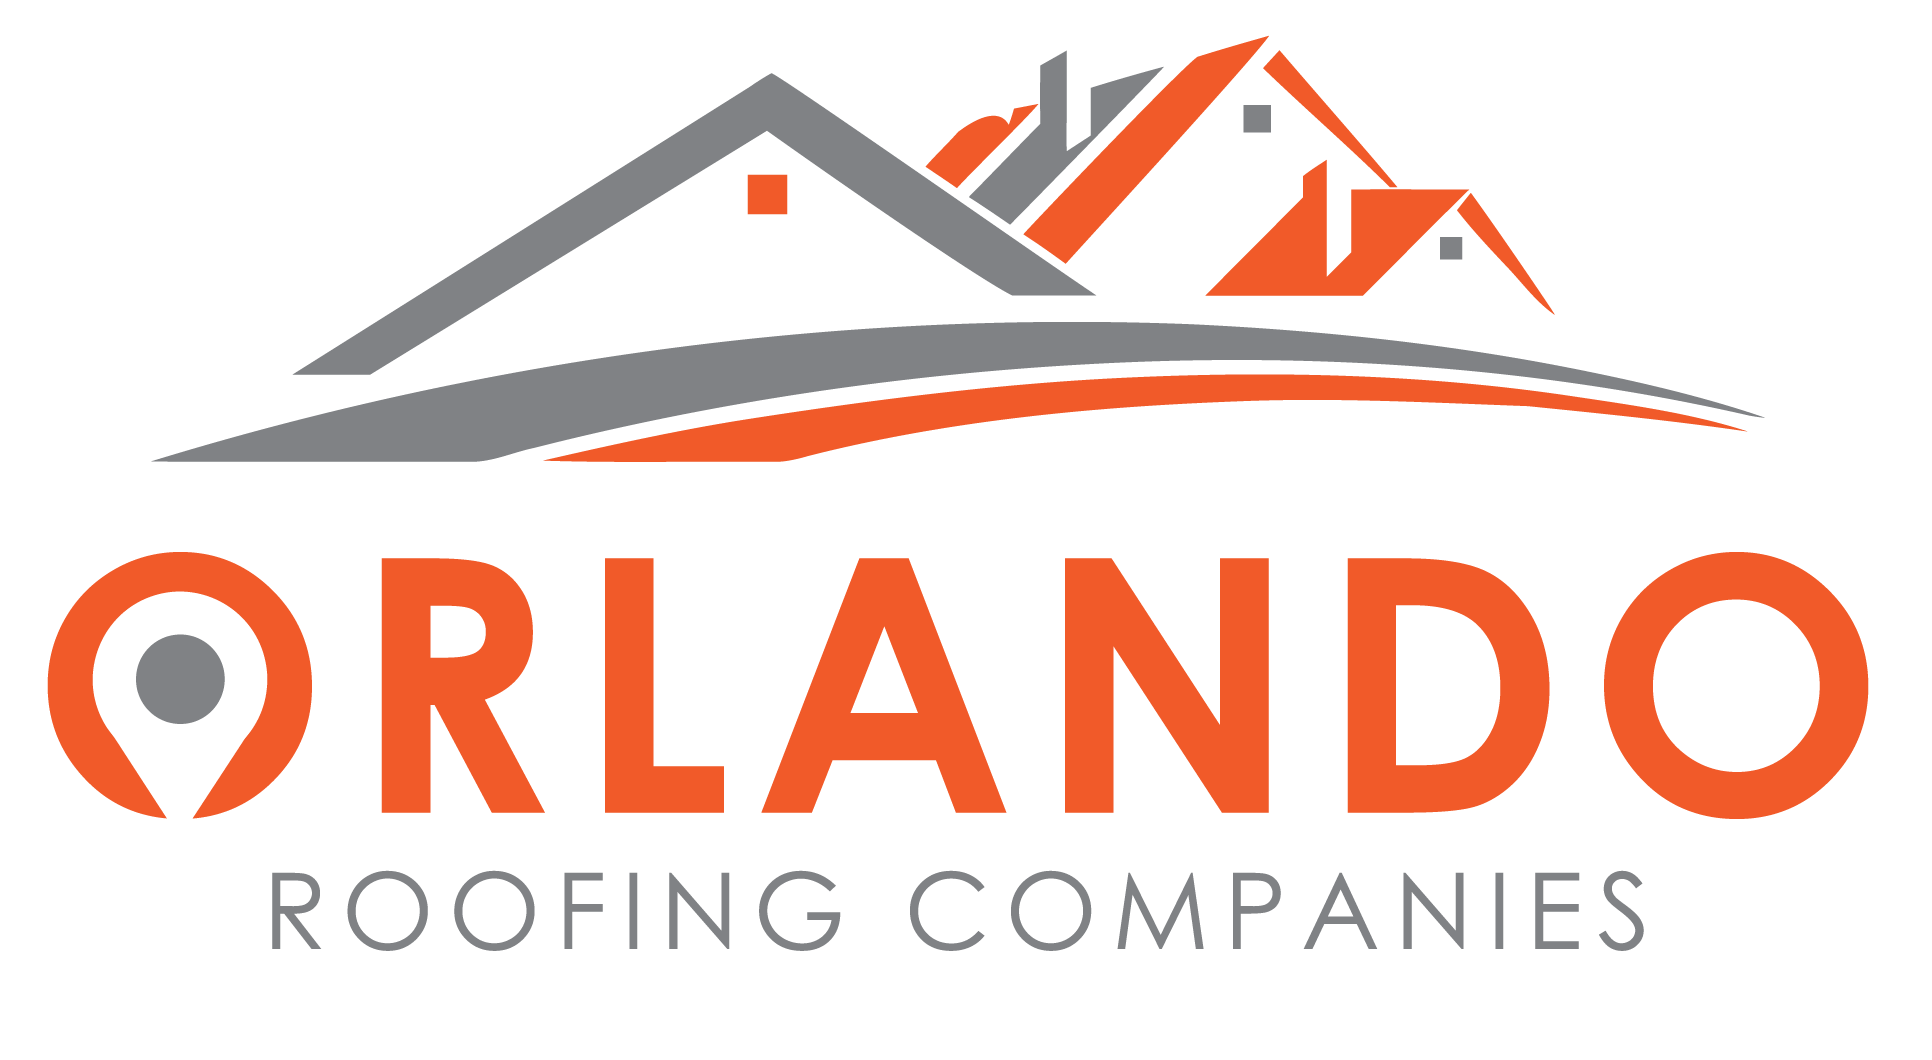 Orlando Roofing Companies's Logo